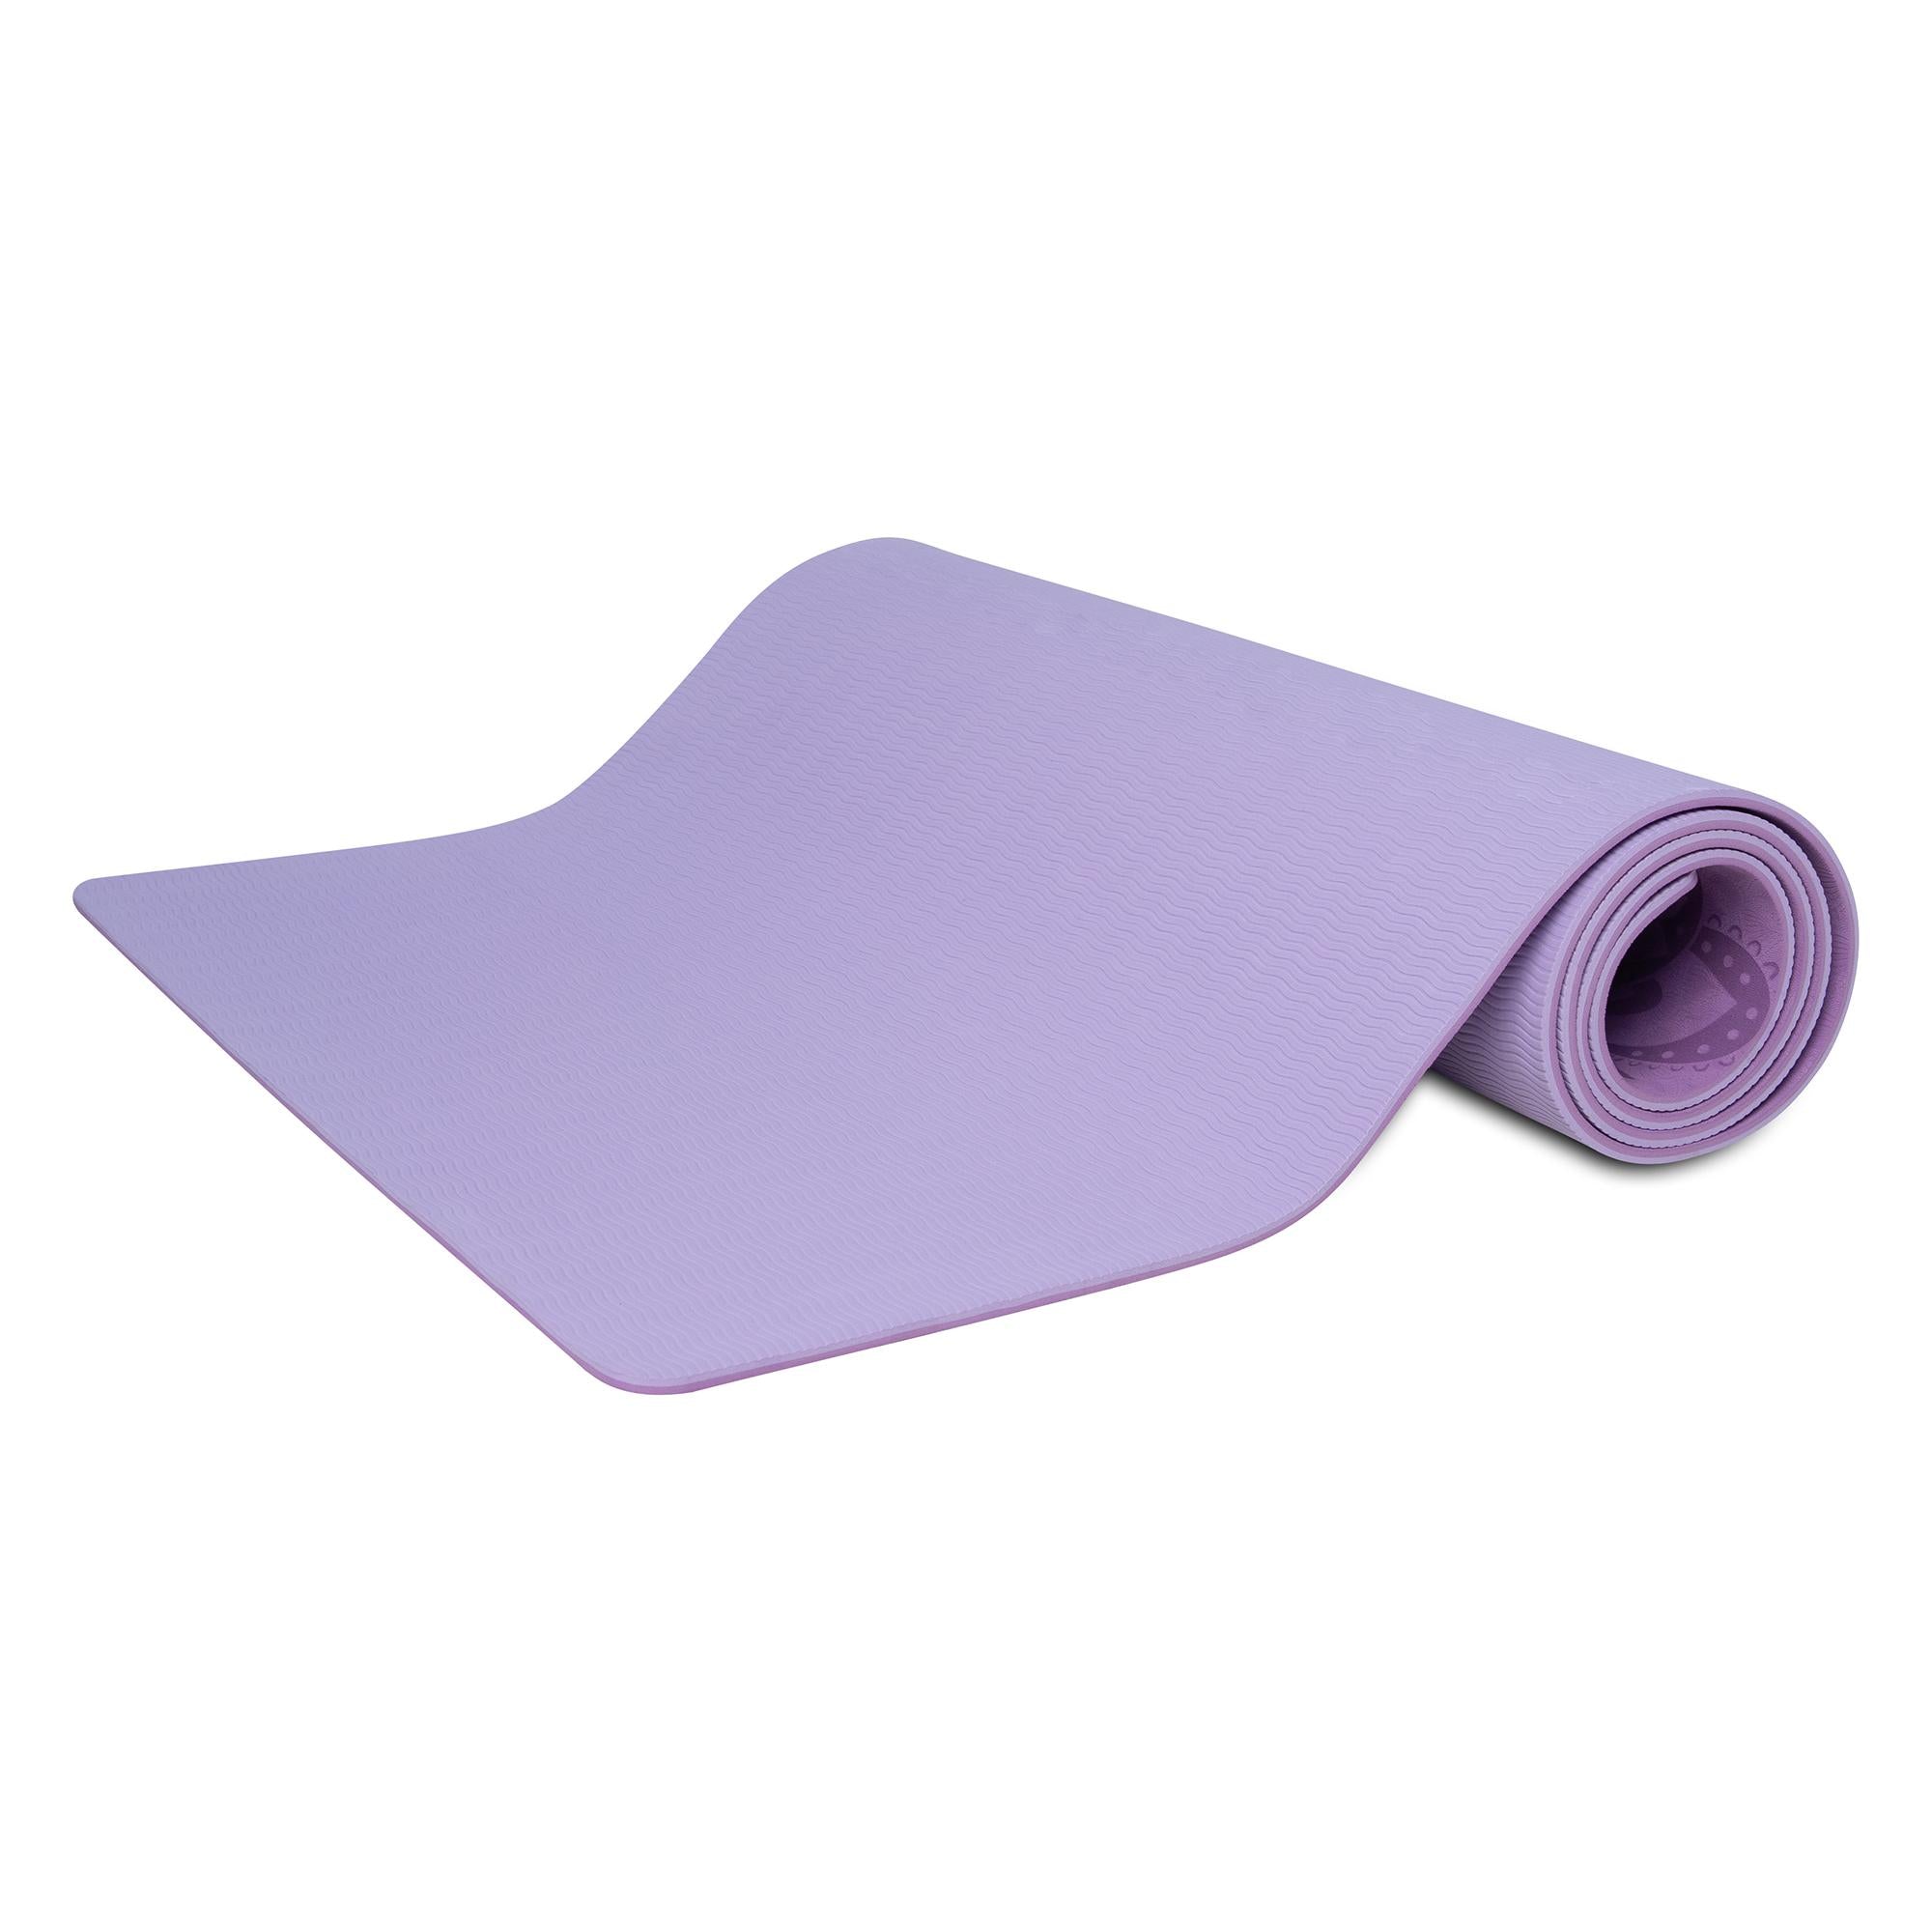 Lotus Yoga Mat - Lavender with Silver Print - 6mm - Love